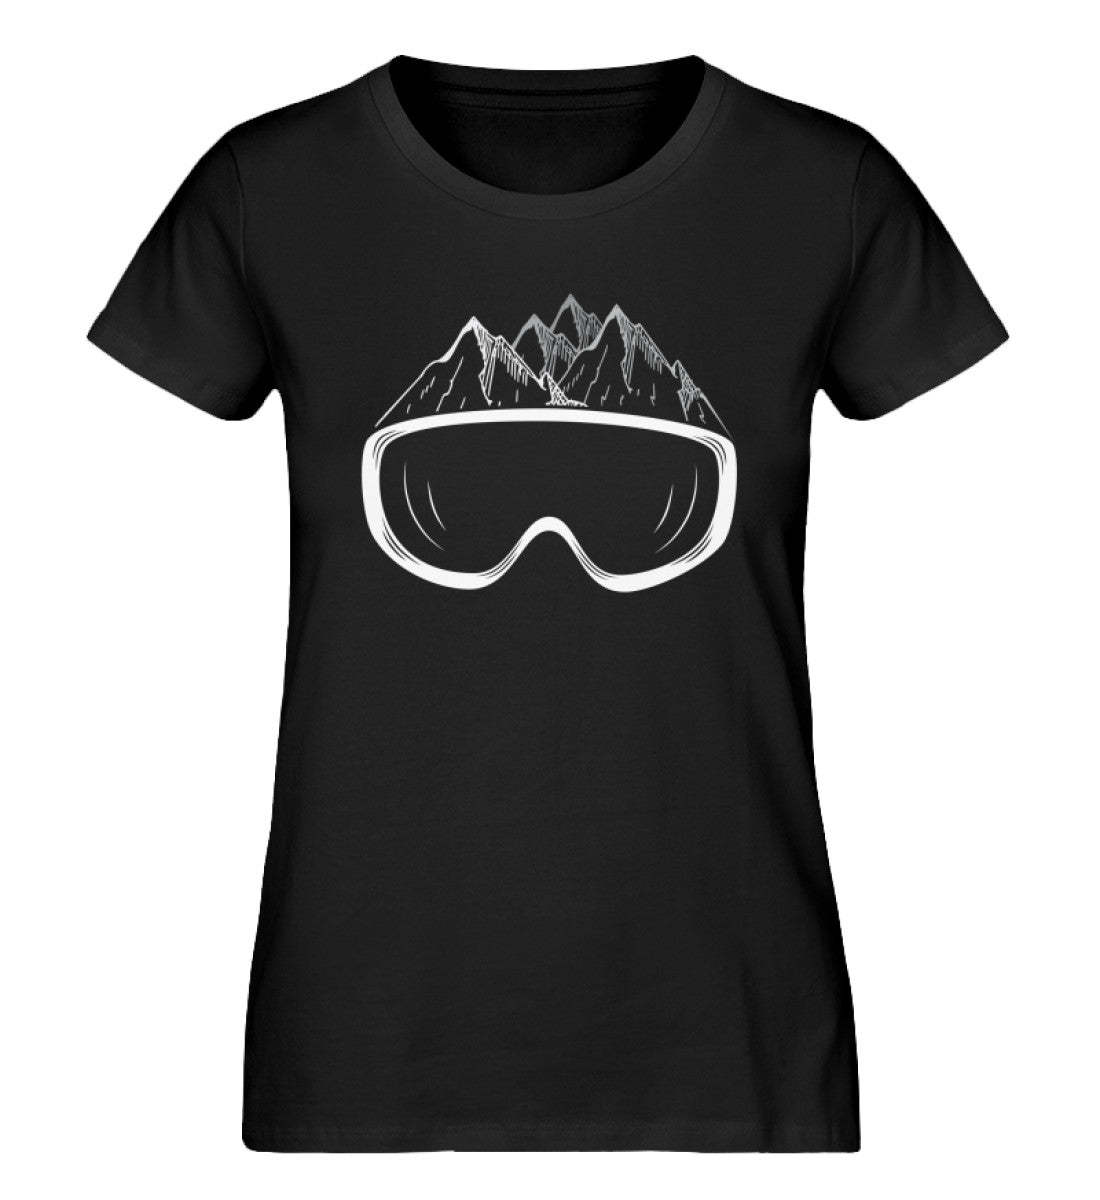 Wintersporteln - Damen Organic T-Shirt ski Schwarz